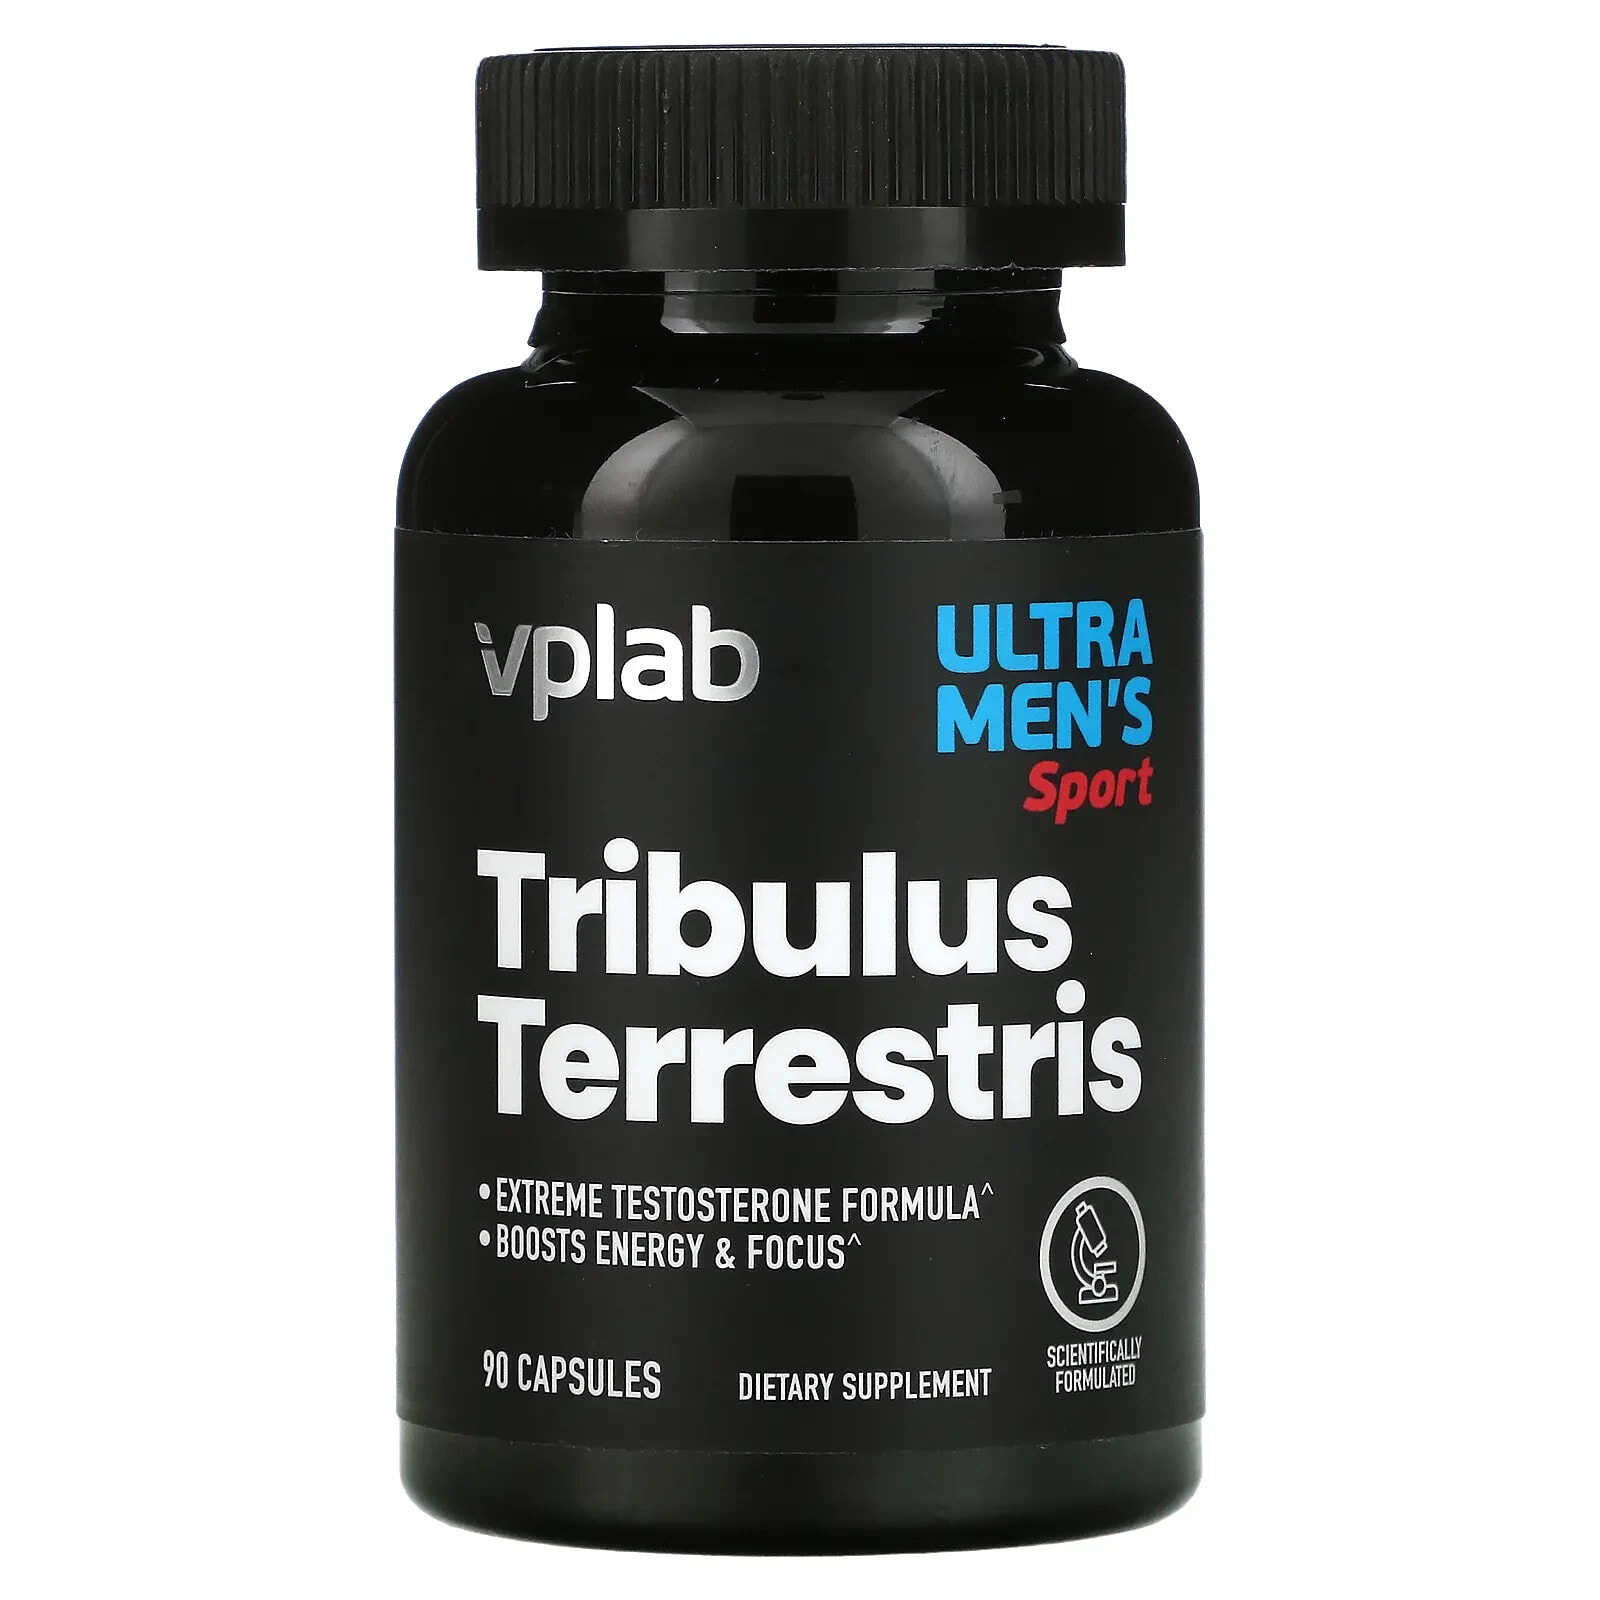 Ultra Men's Sport, Tribulus Terrestris, 90 Capsules